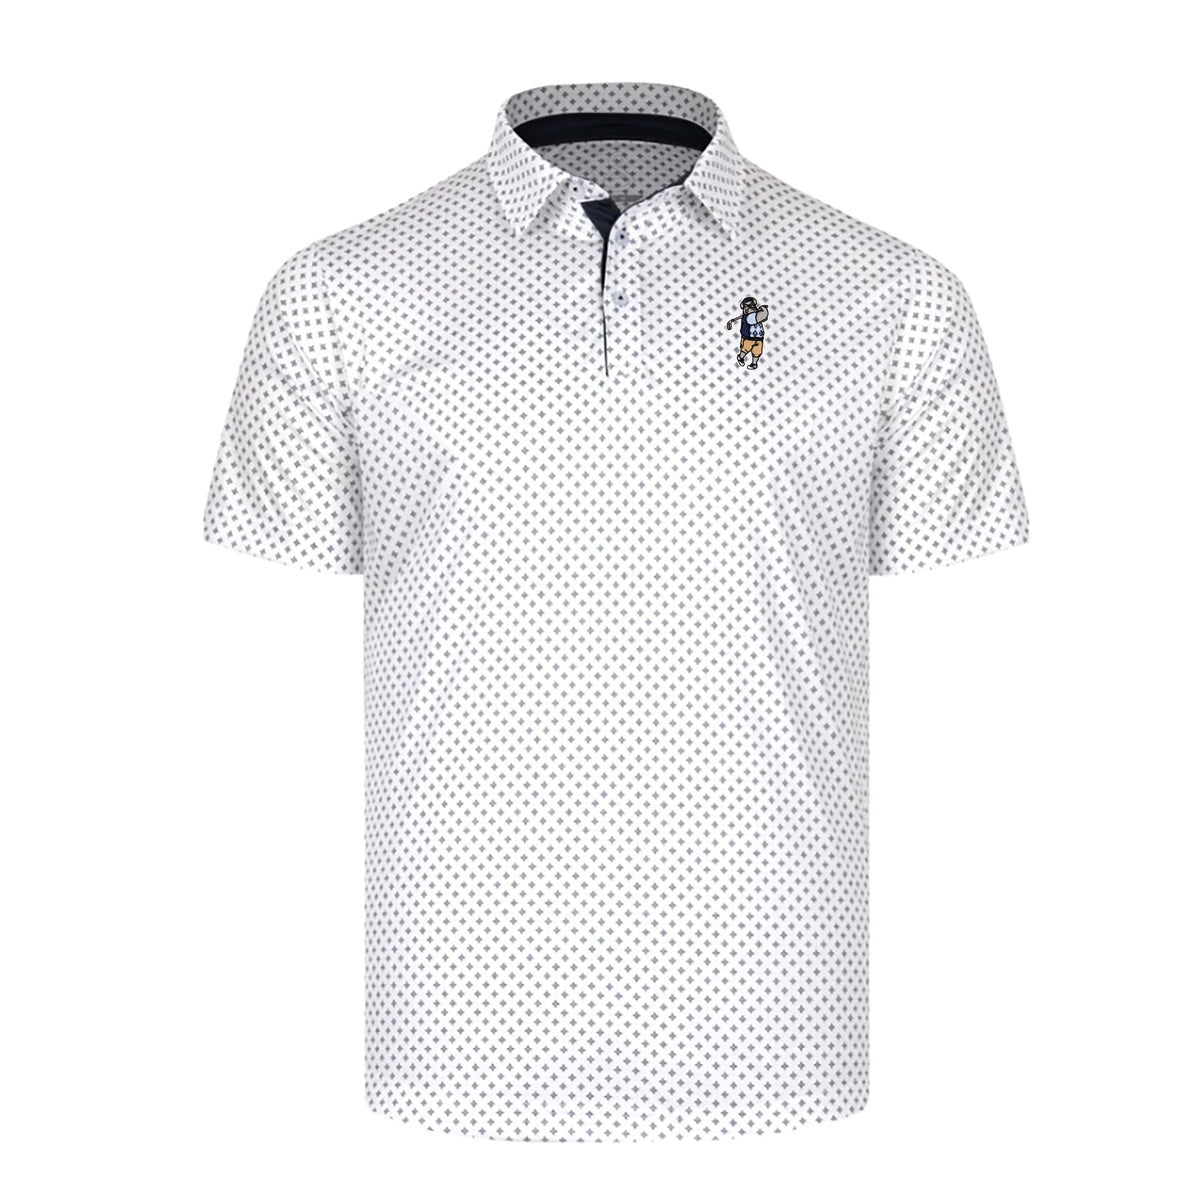 The Citadel, Spike Golf, Swannies Golf Men's Phillips Polo Shirt